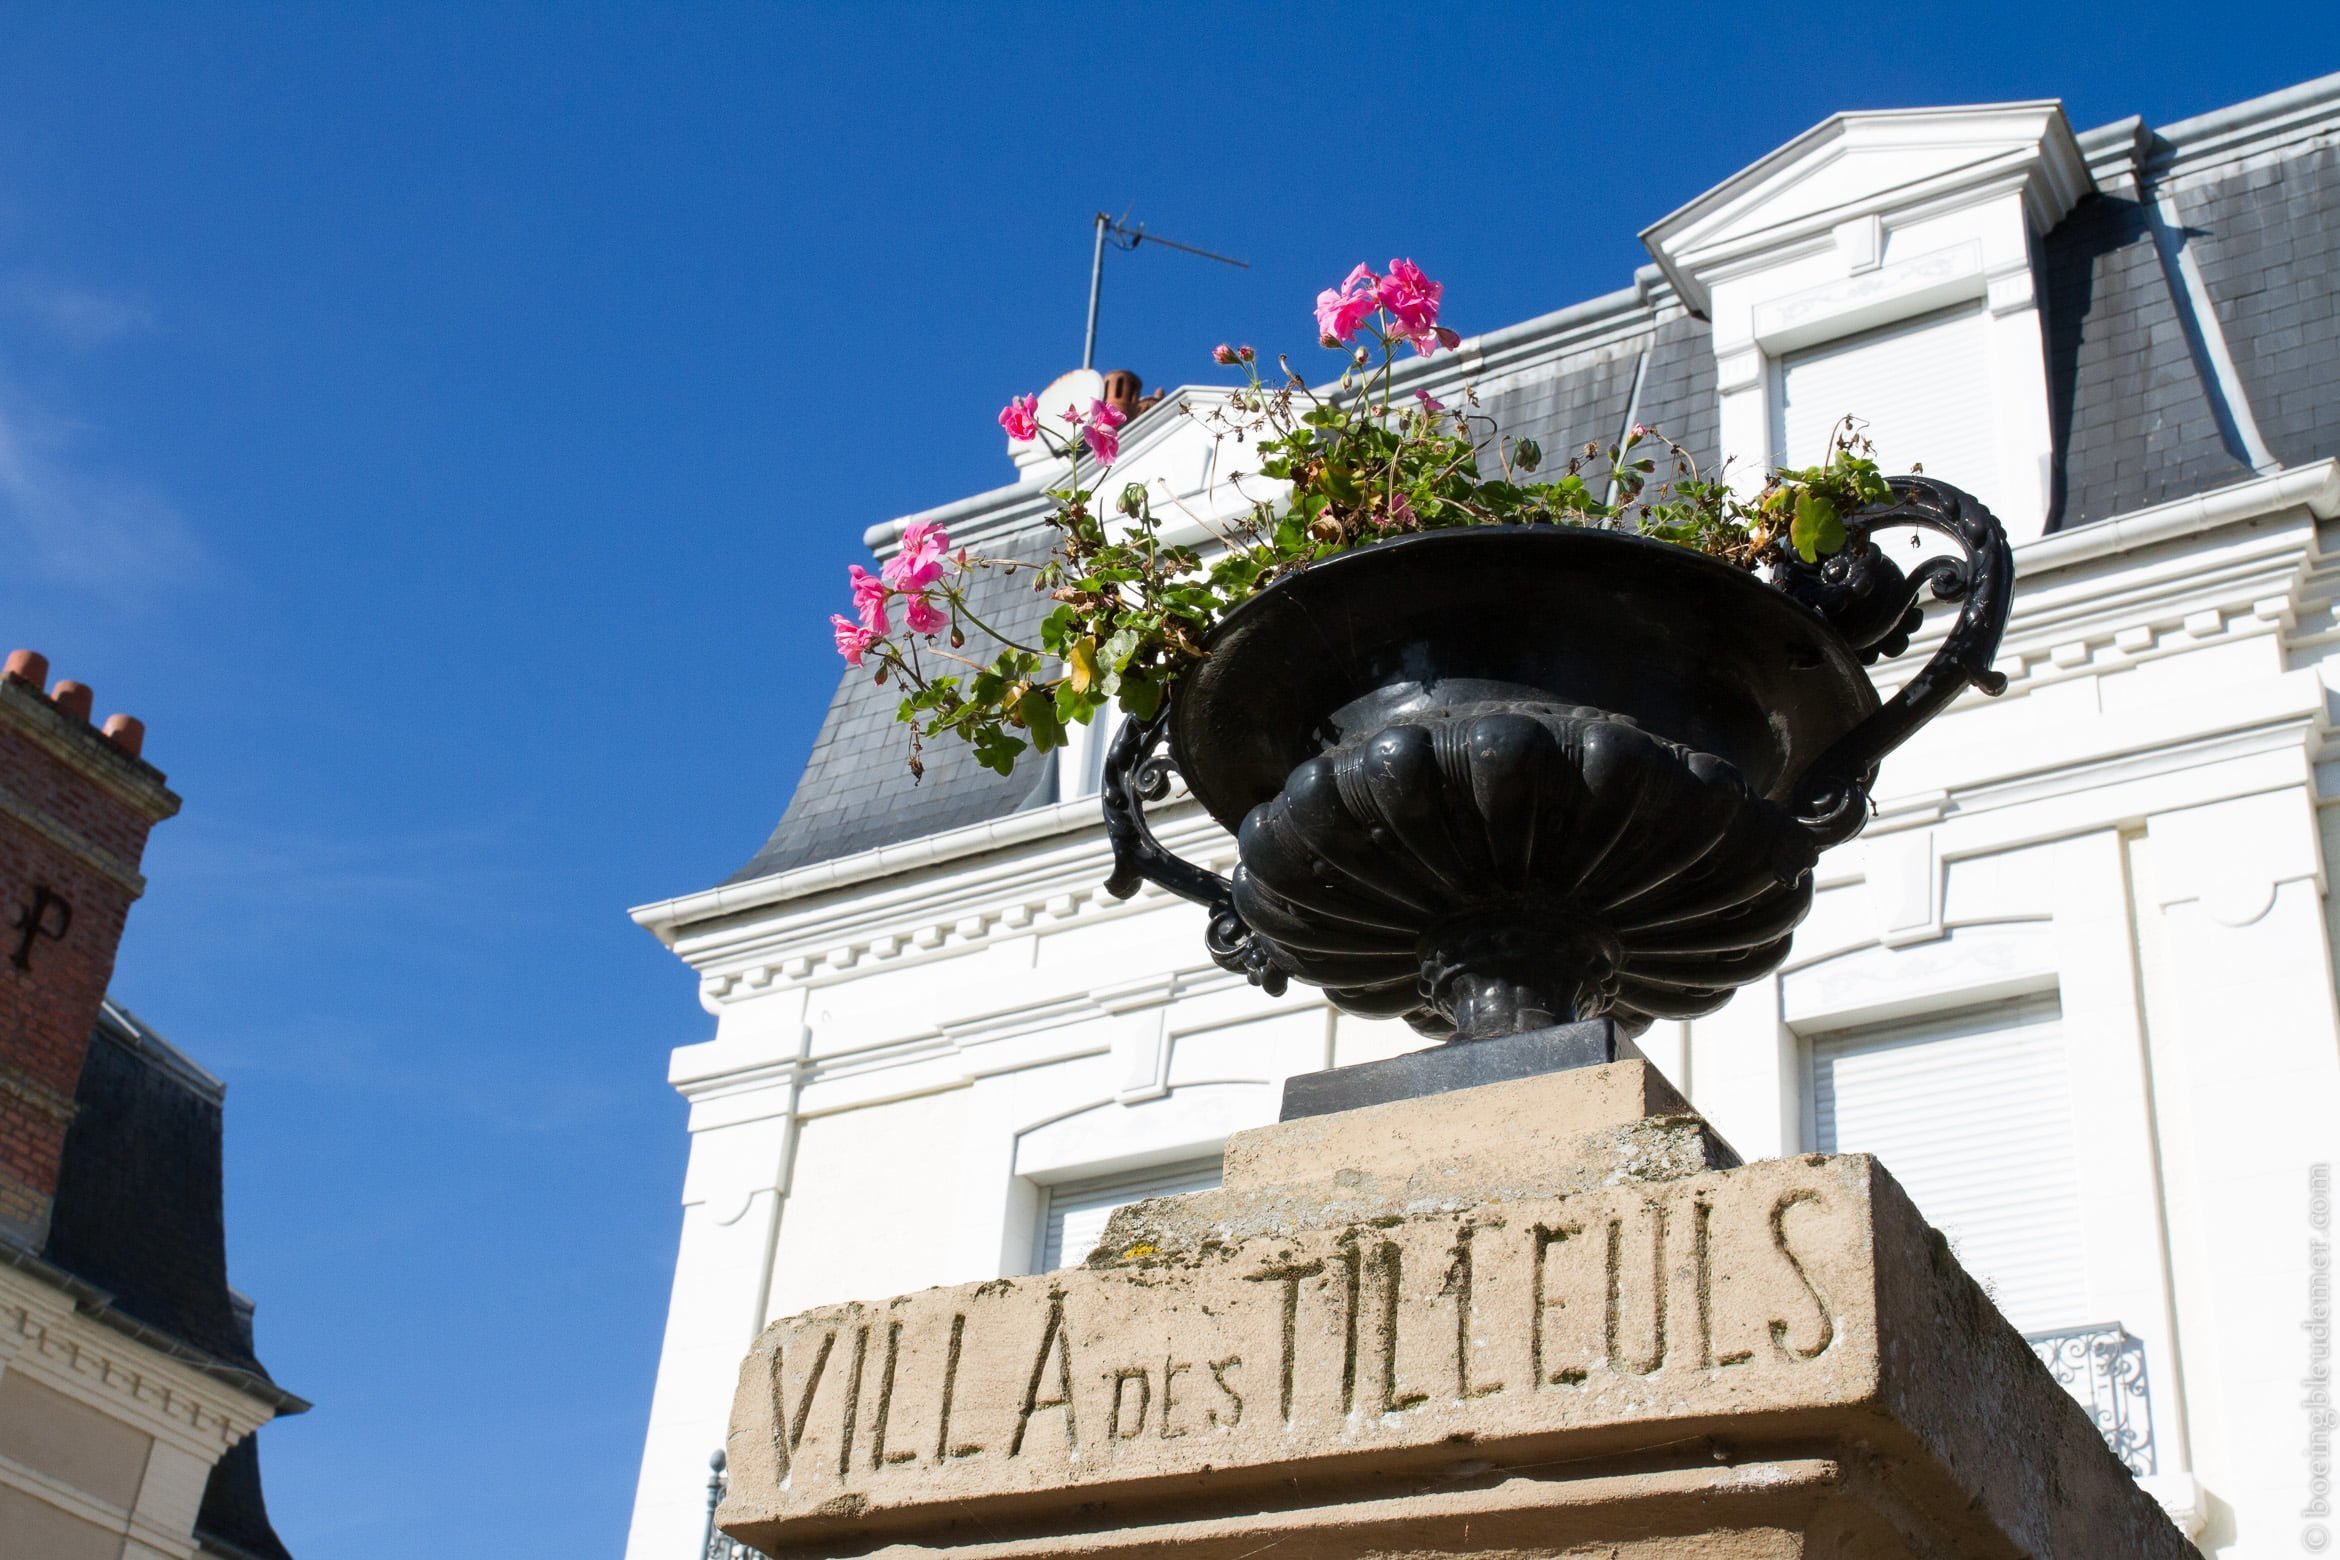 Un weekend à Deauville: villa des tilleuls